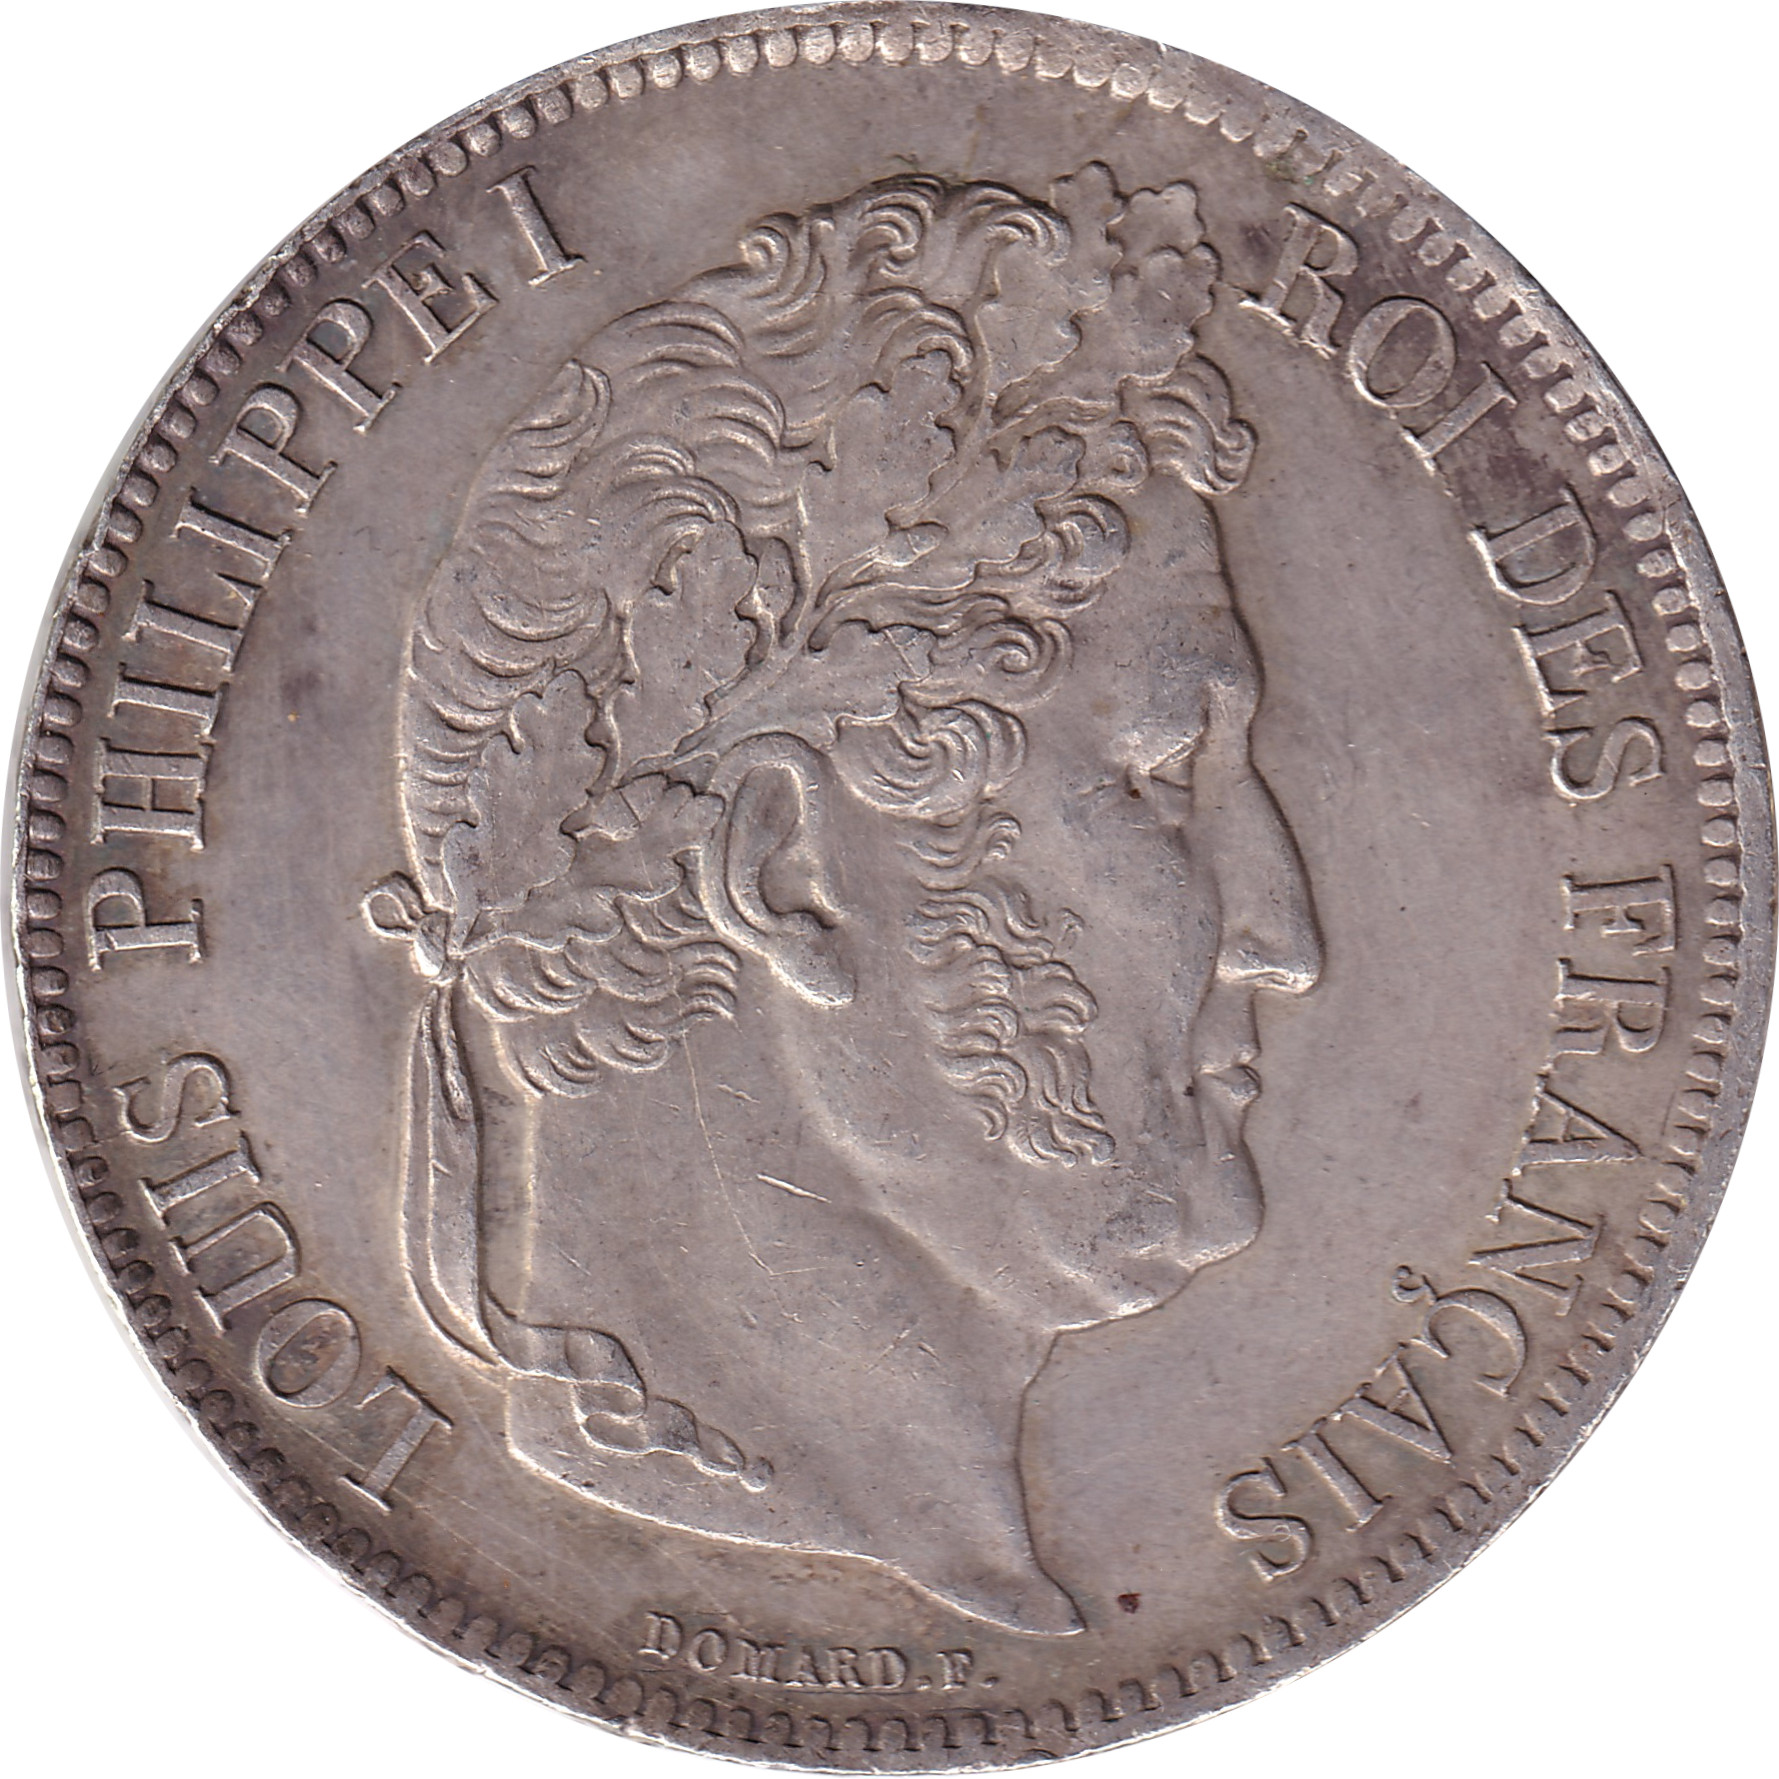 5 francs - Louis Philippe I - Laureate head